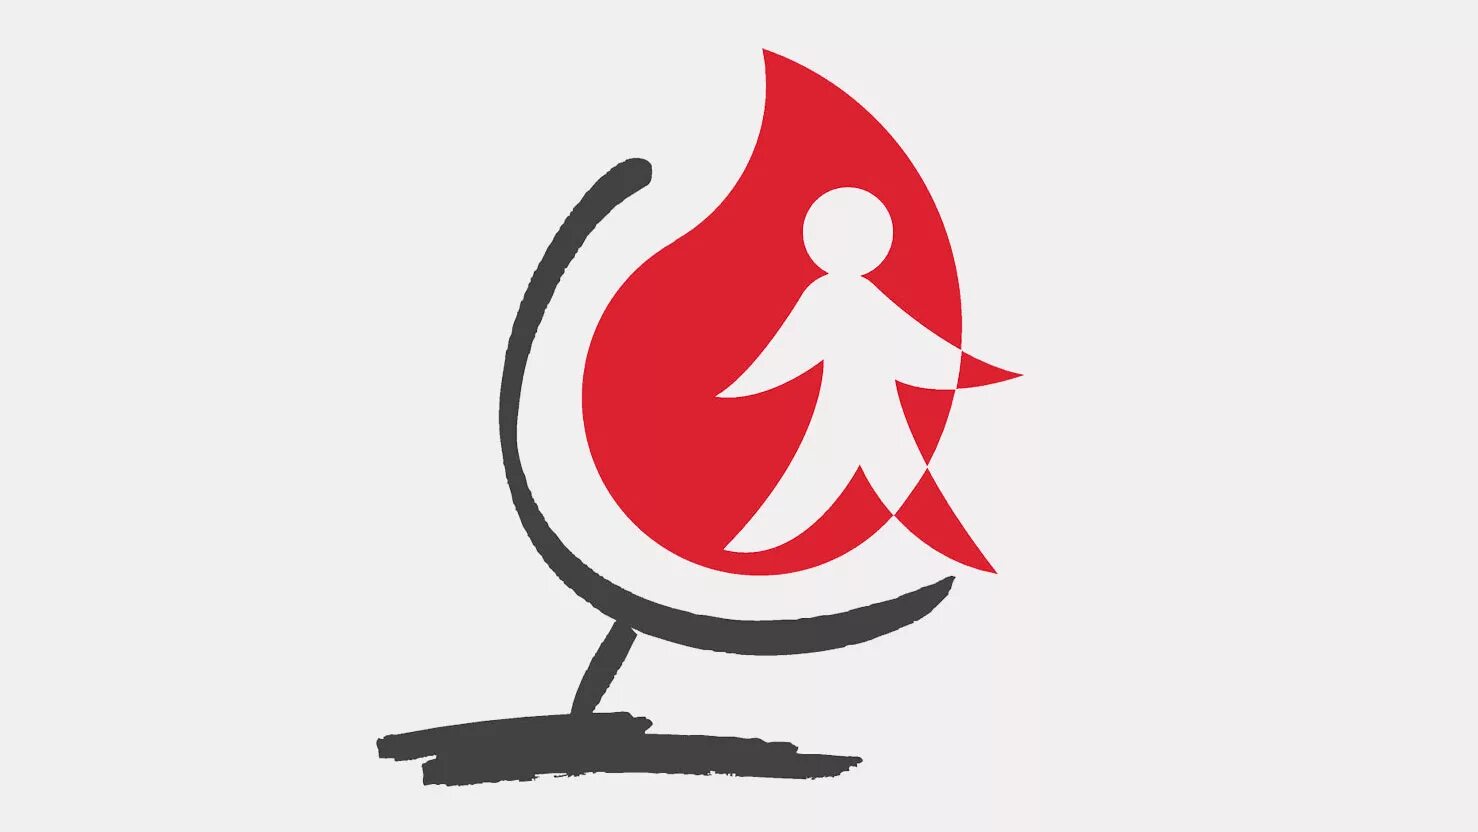 Донорство ребенка. Донорство крови логотип. Embliyma donorstva. Символ донора крови. Символ службы крови.